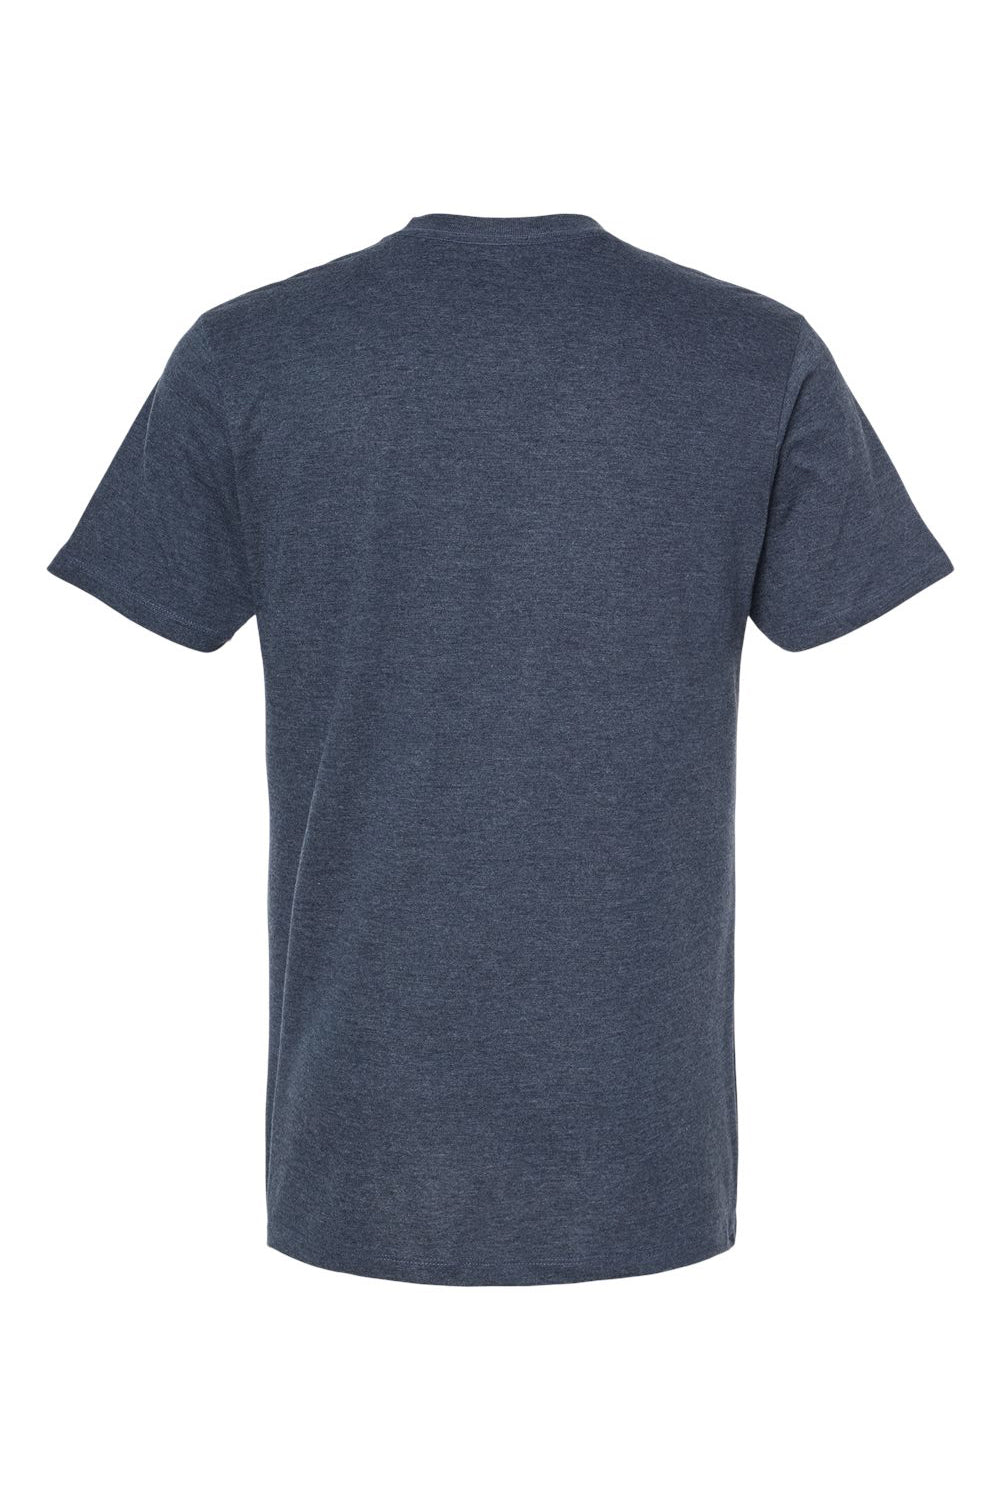 Tultex 541 Mens Premium Short Sleeve Crewneck T-Shirt Heather Navy Blue Flat Back